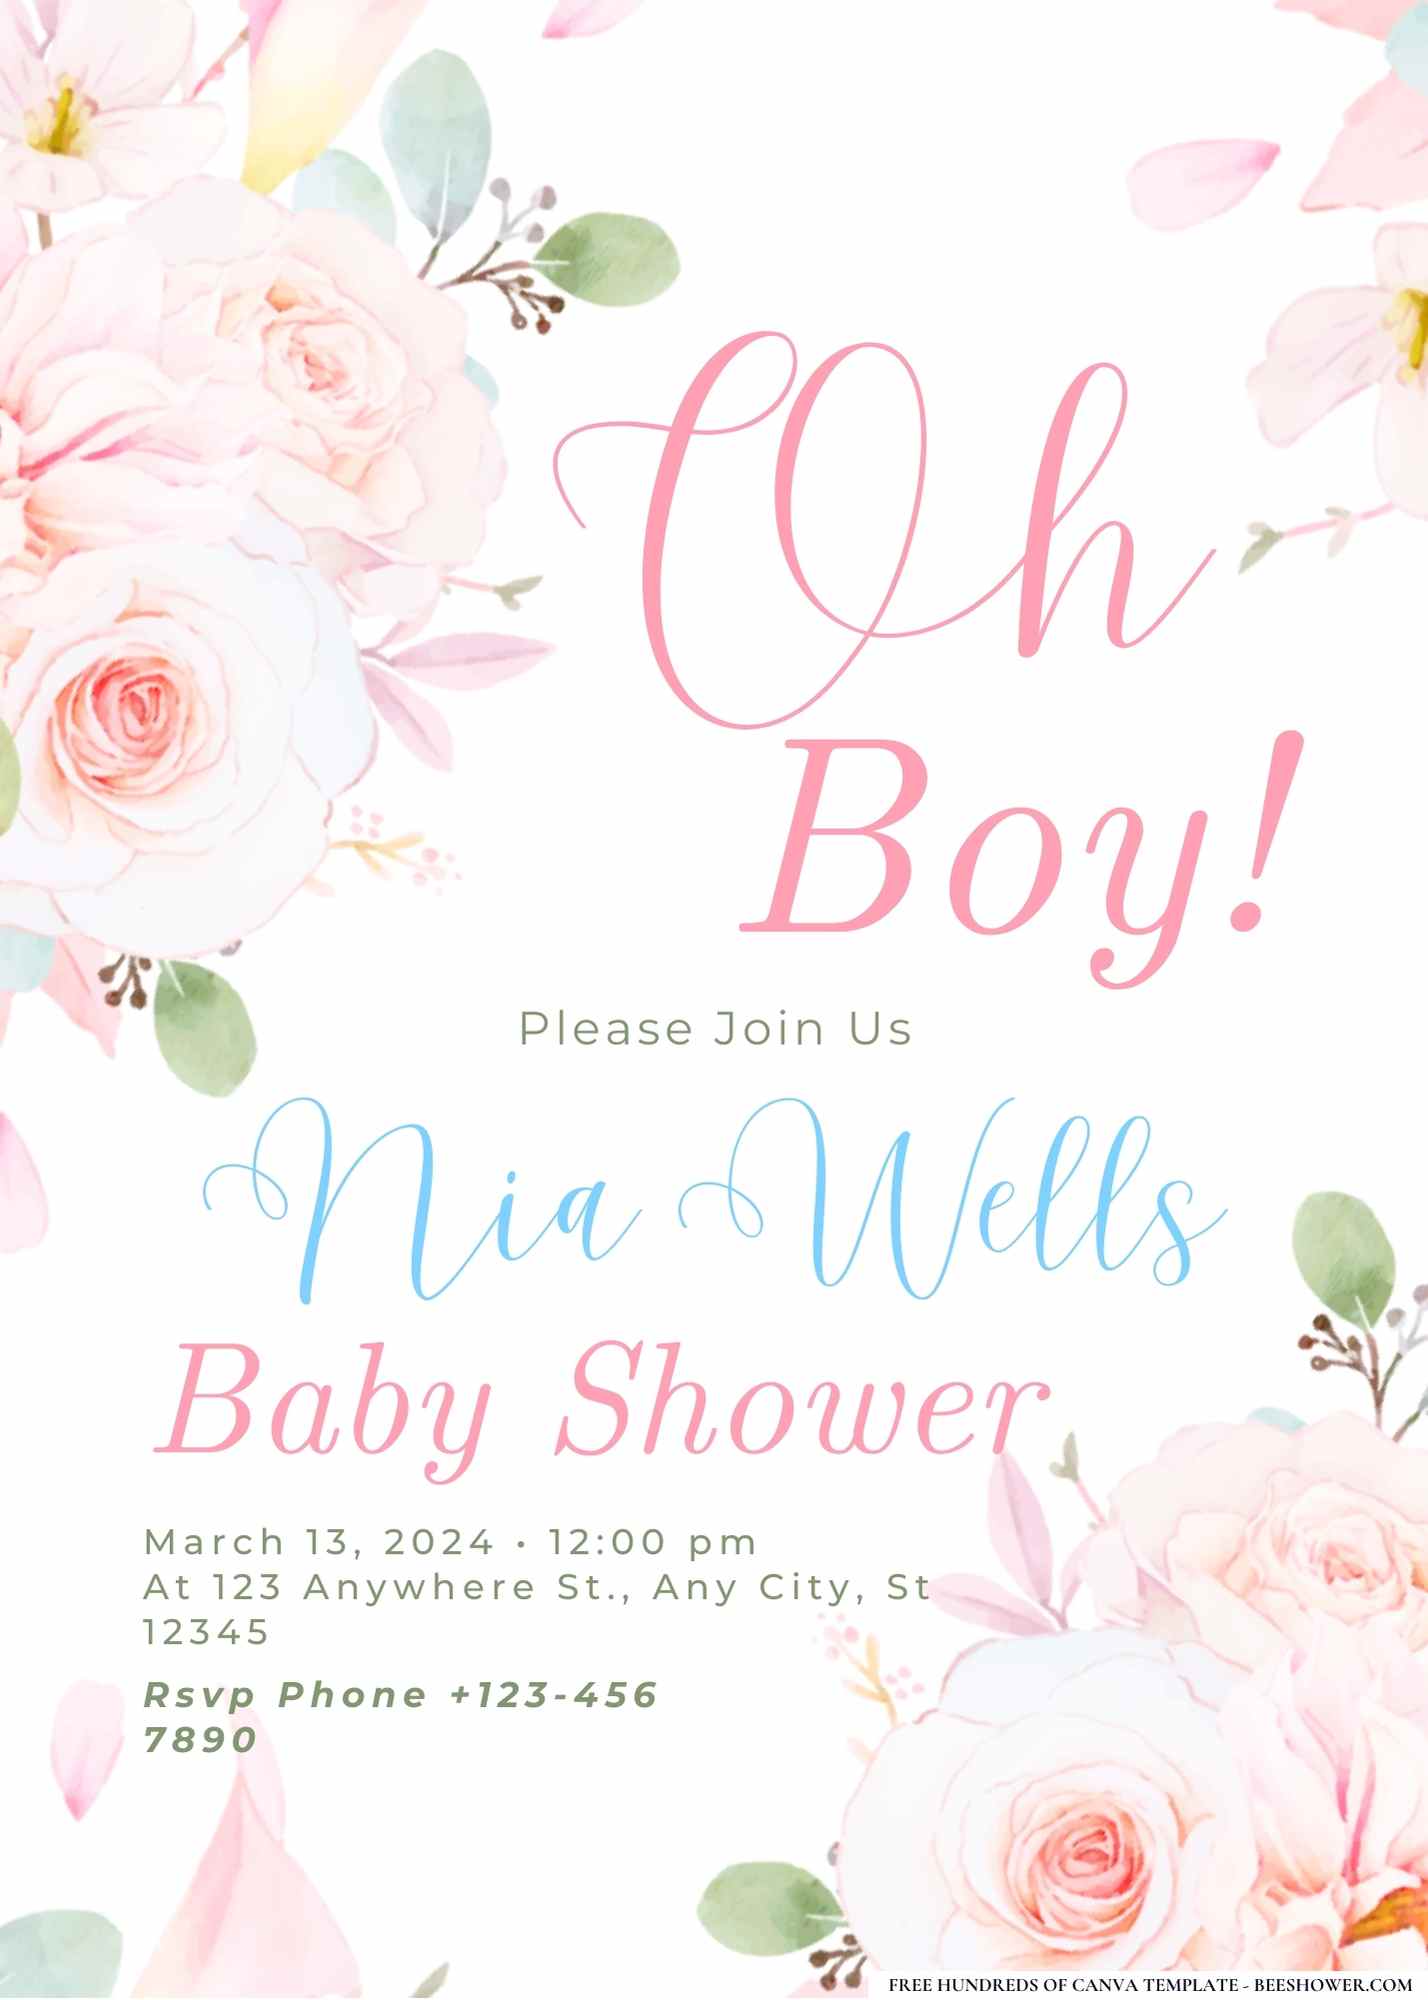 Bouquet of Joy Baby Shower Invitation